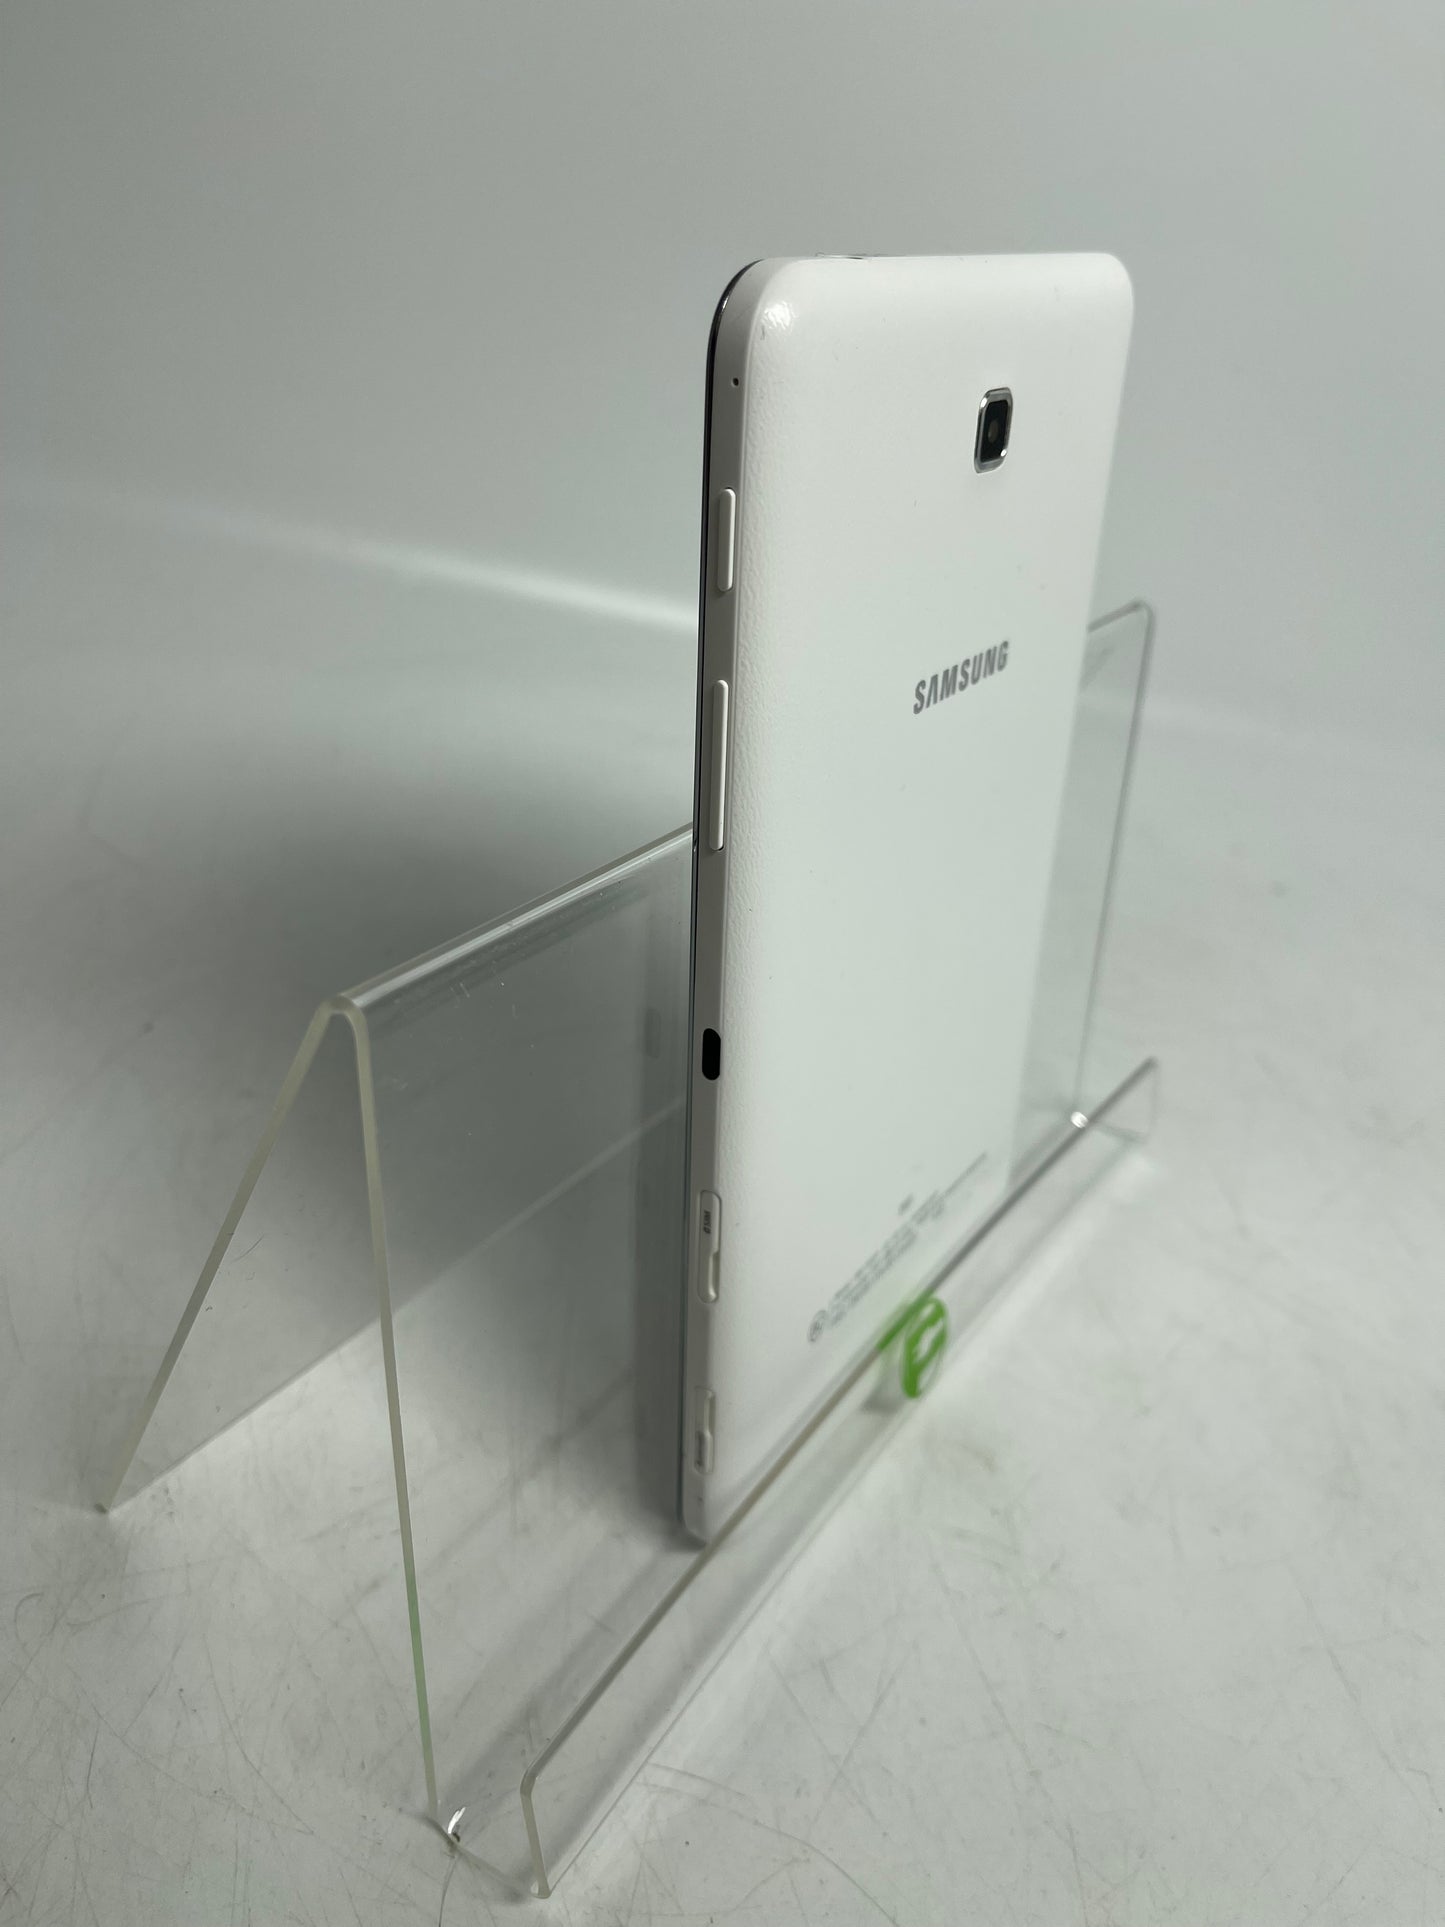 WiFi Only Samsung Galaxy Tab 4 7.0" 16GB White SM-T237P